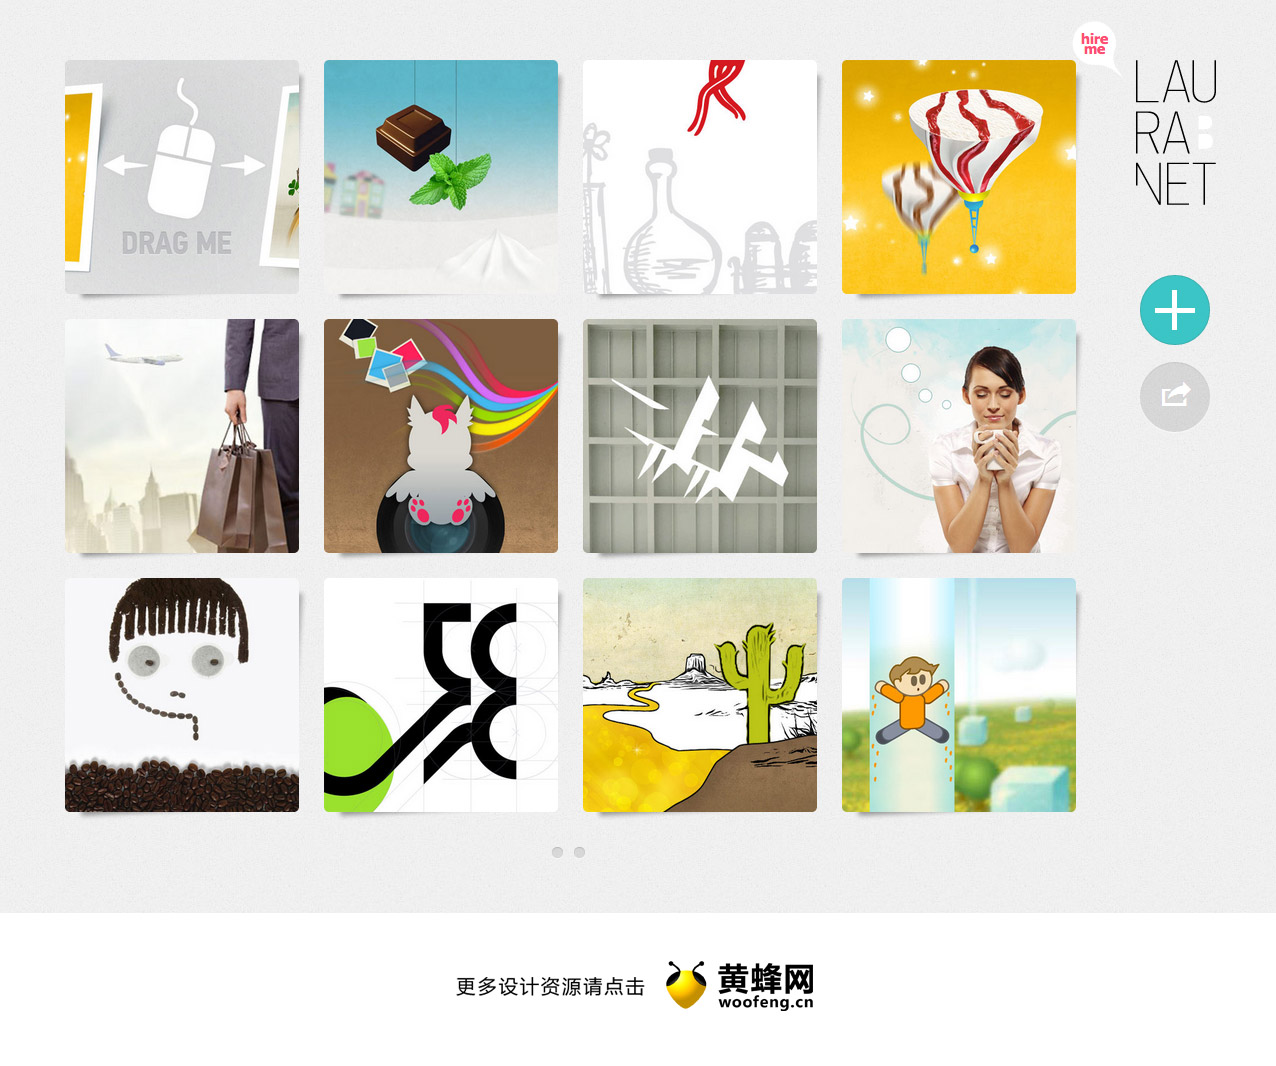 LAURA BAFFARI自由图形和网页设计师，来源自黄蜂网https://woofeng.cn/